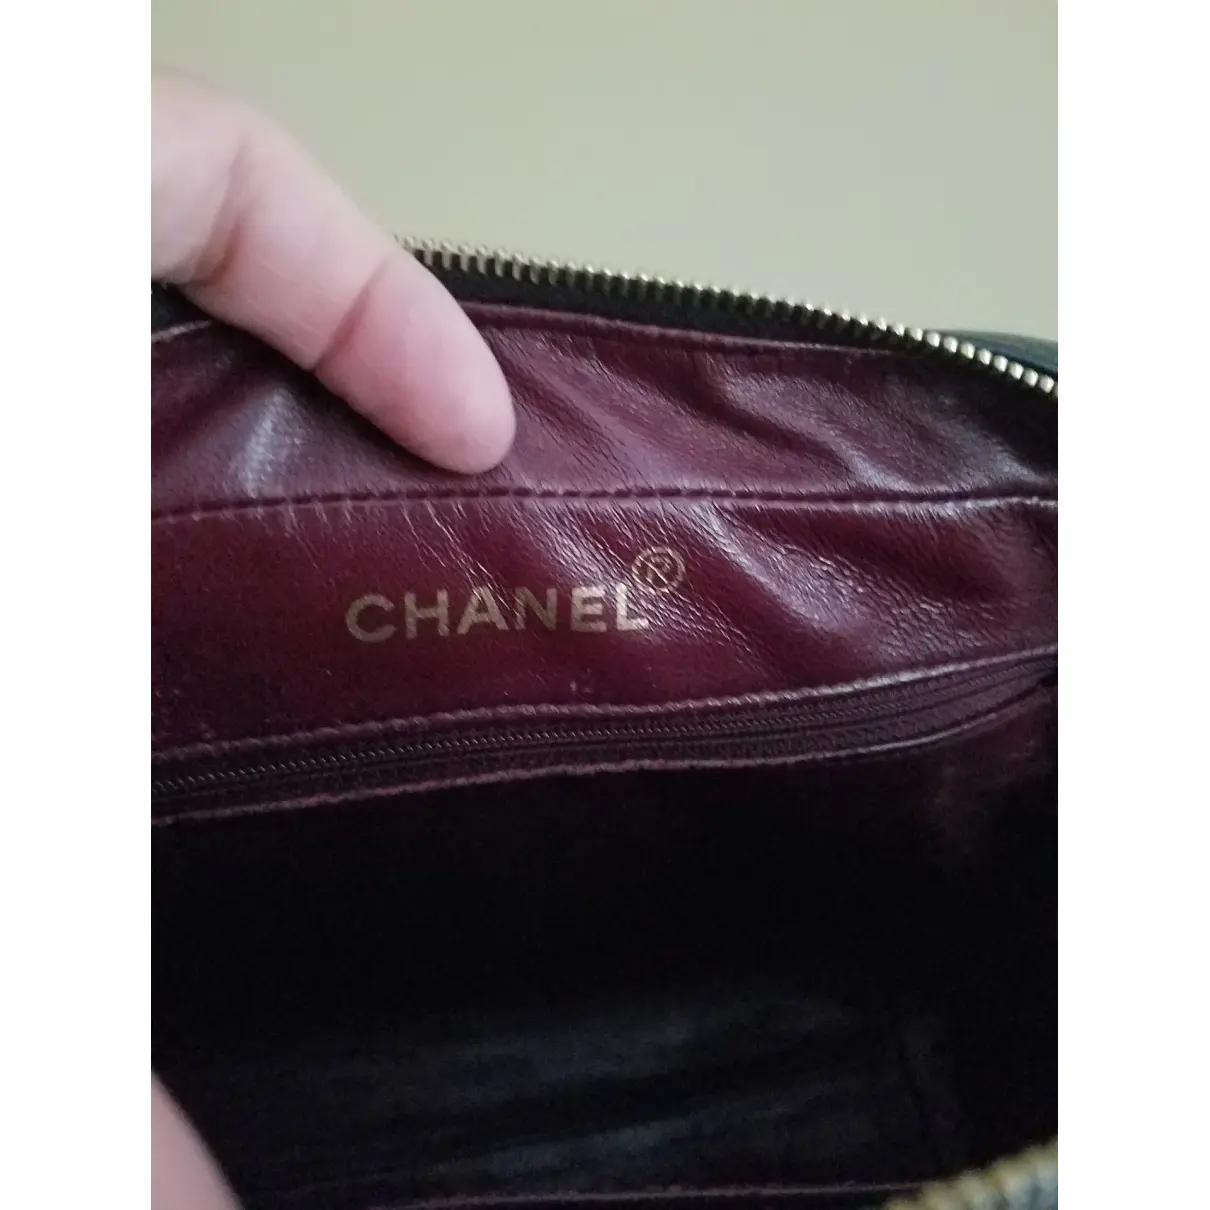 Buy Chanel Timeless/Classique leather bag online - Vintage